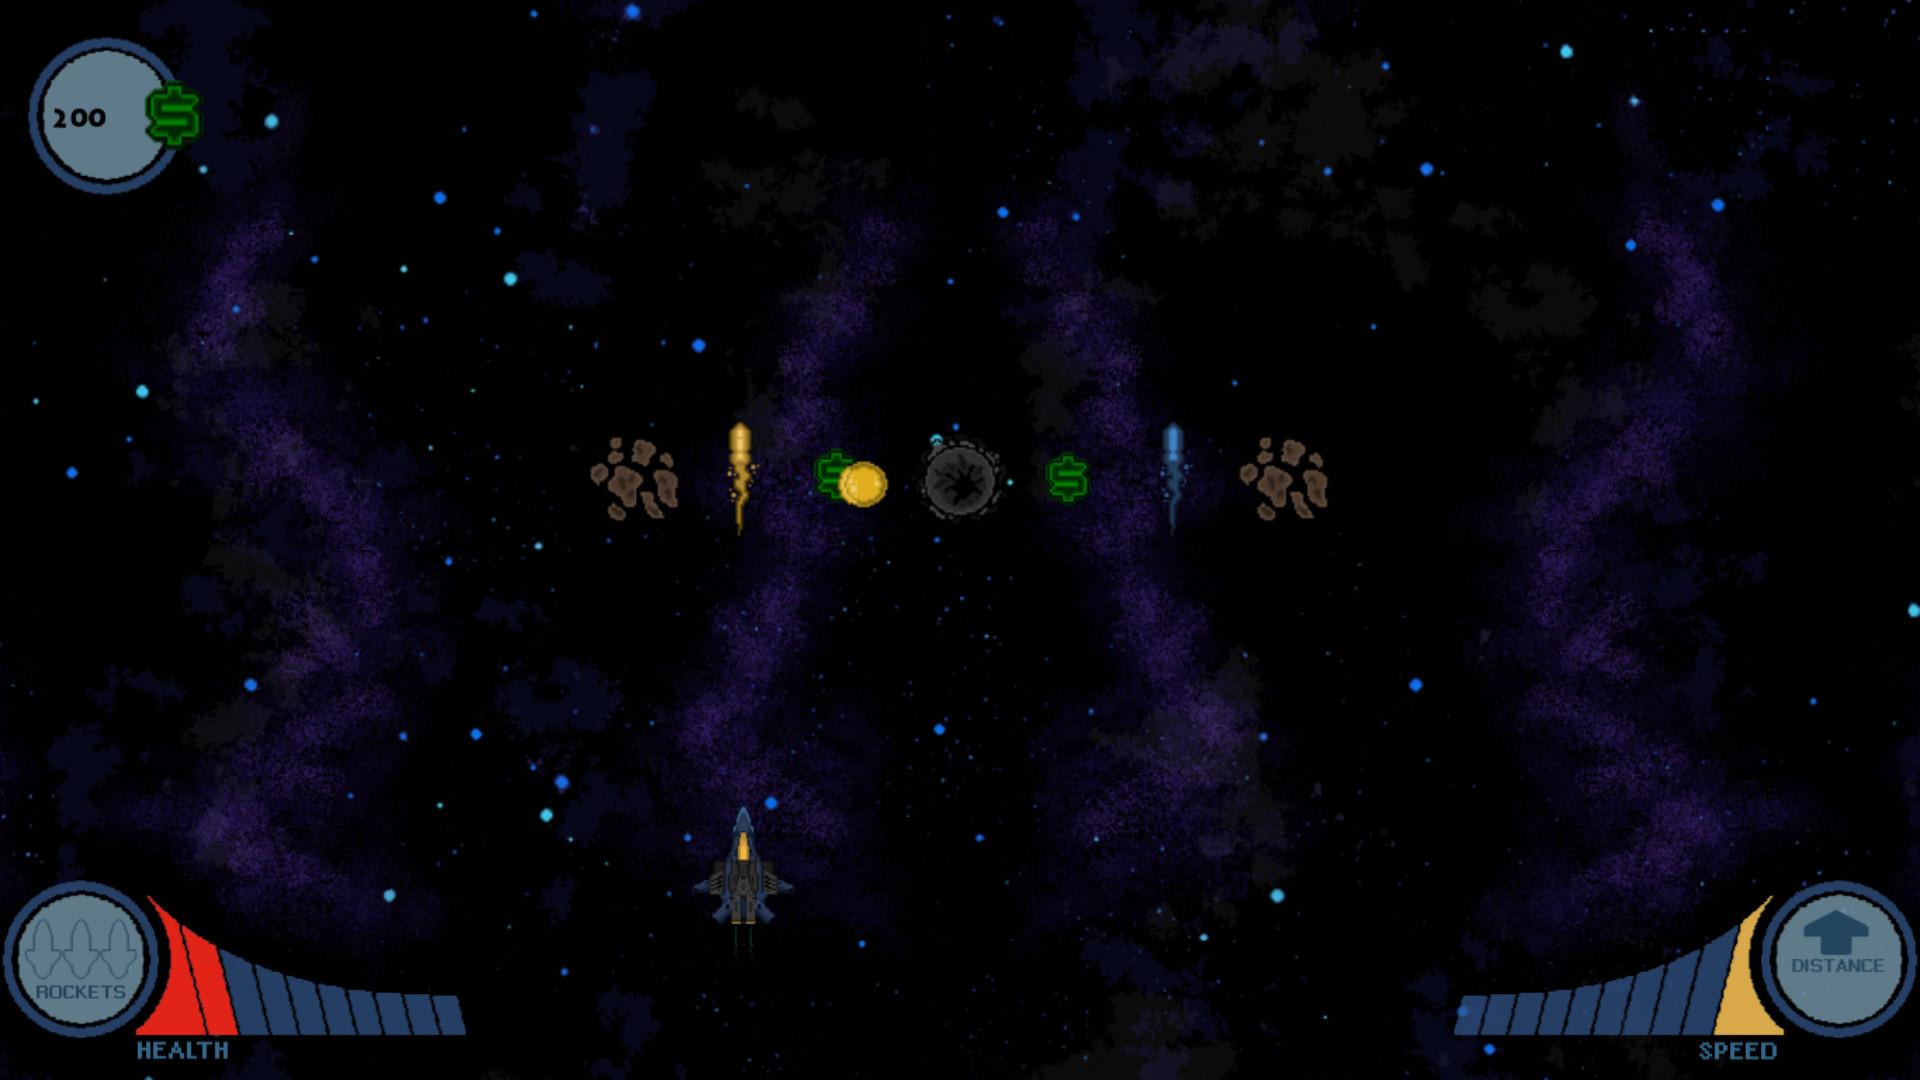 Screenshot №2 from game $1 Ride